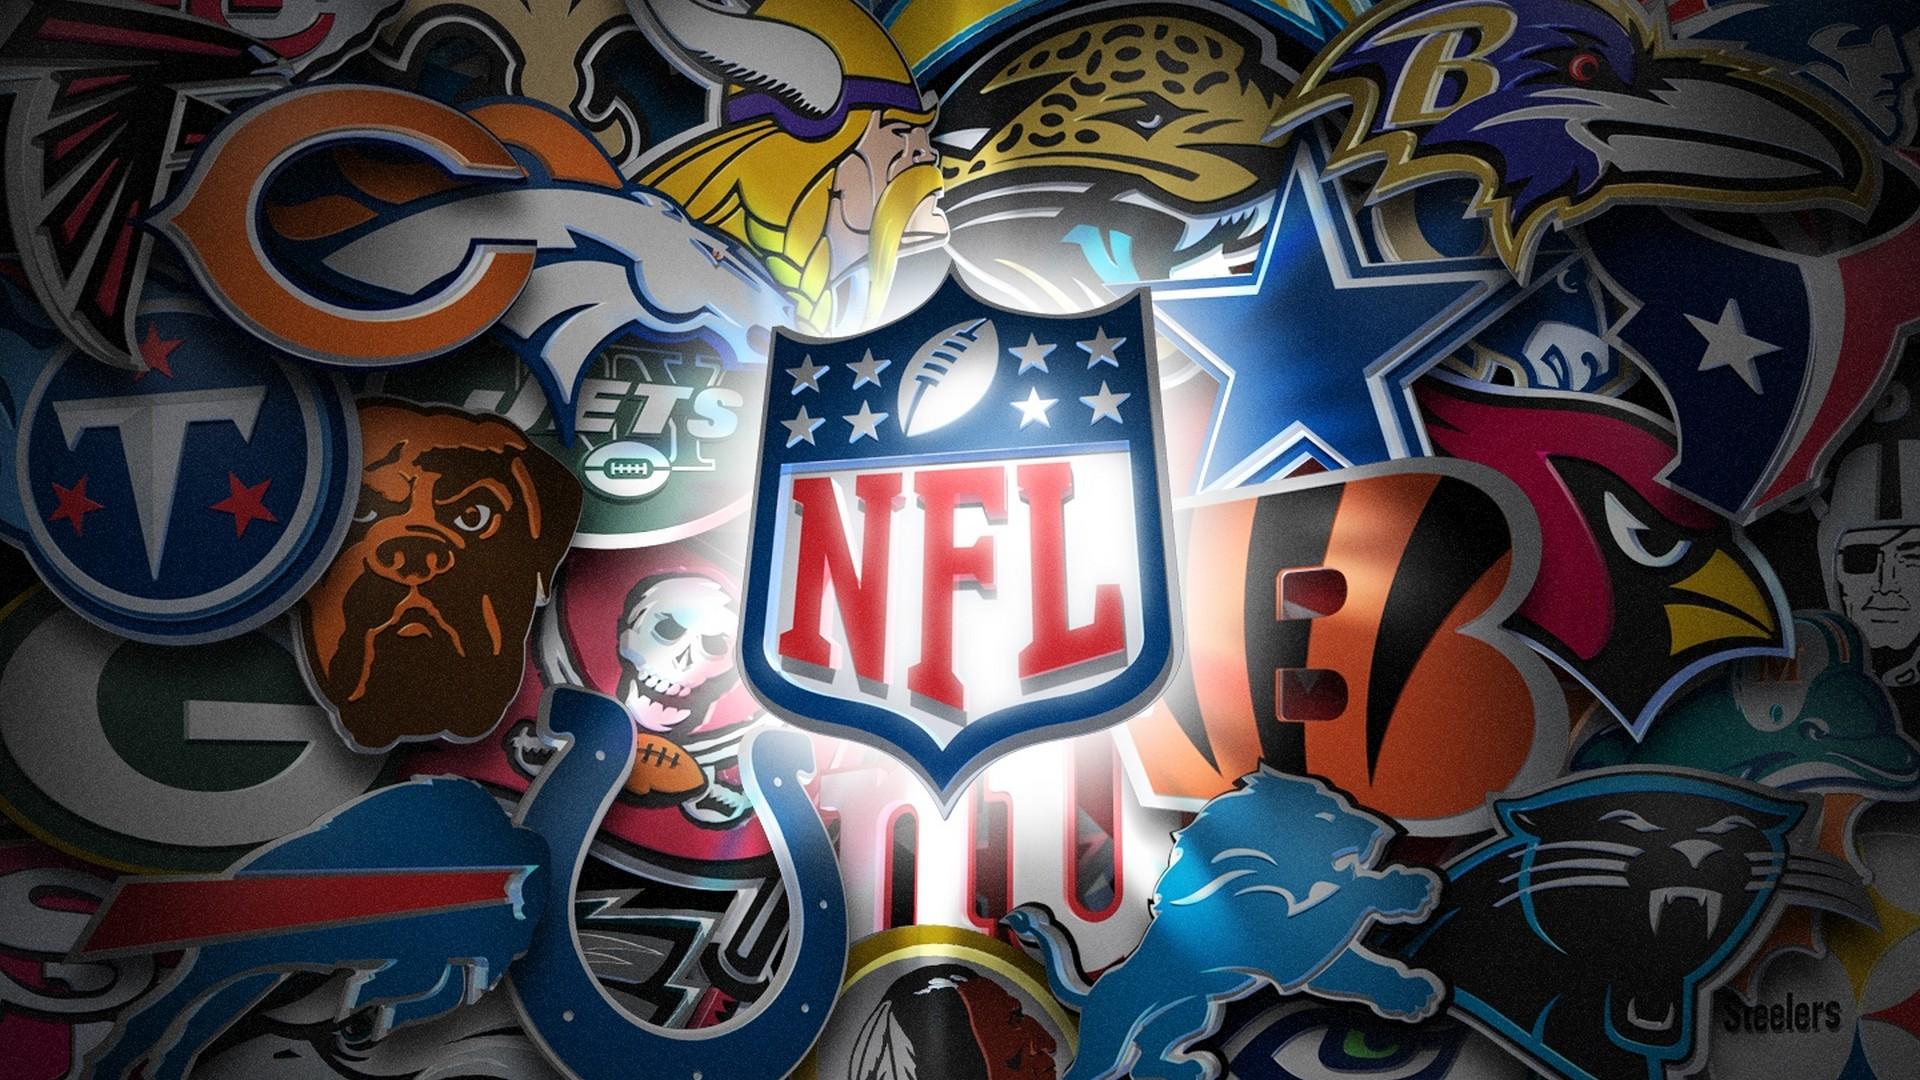 NFL Football Wallpaper. Best 32 NFL Teams Background 2020